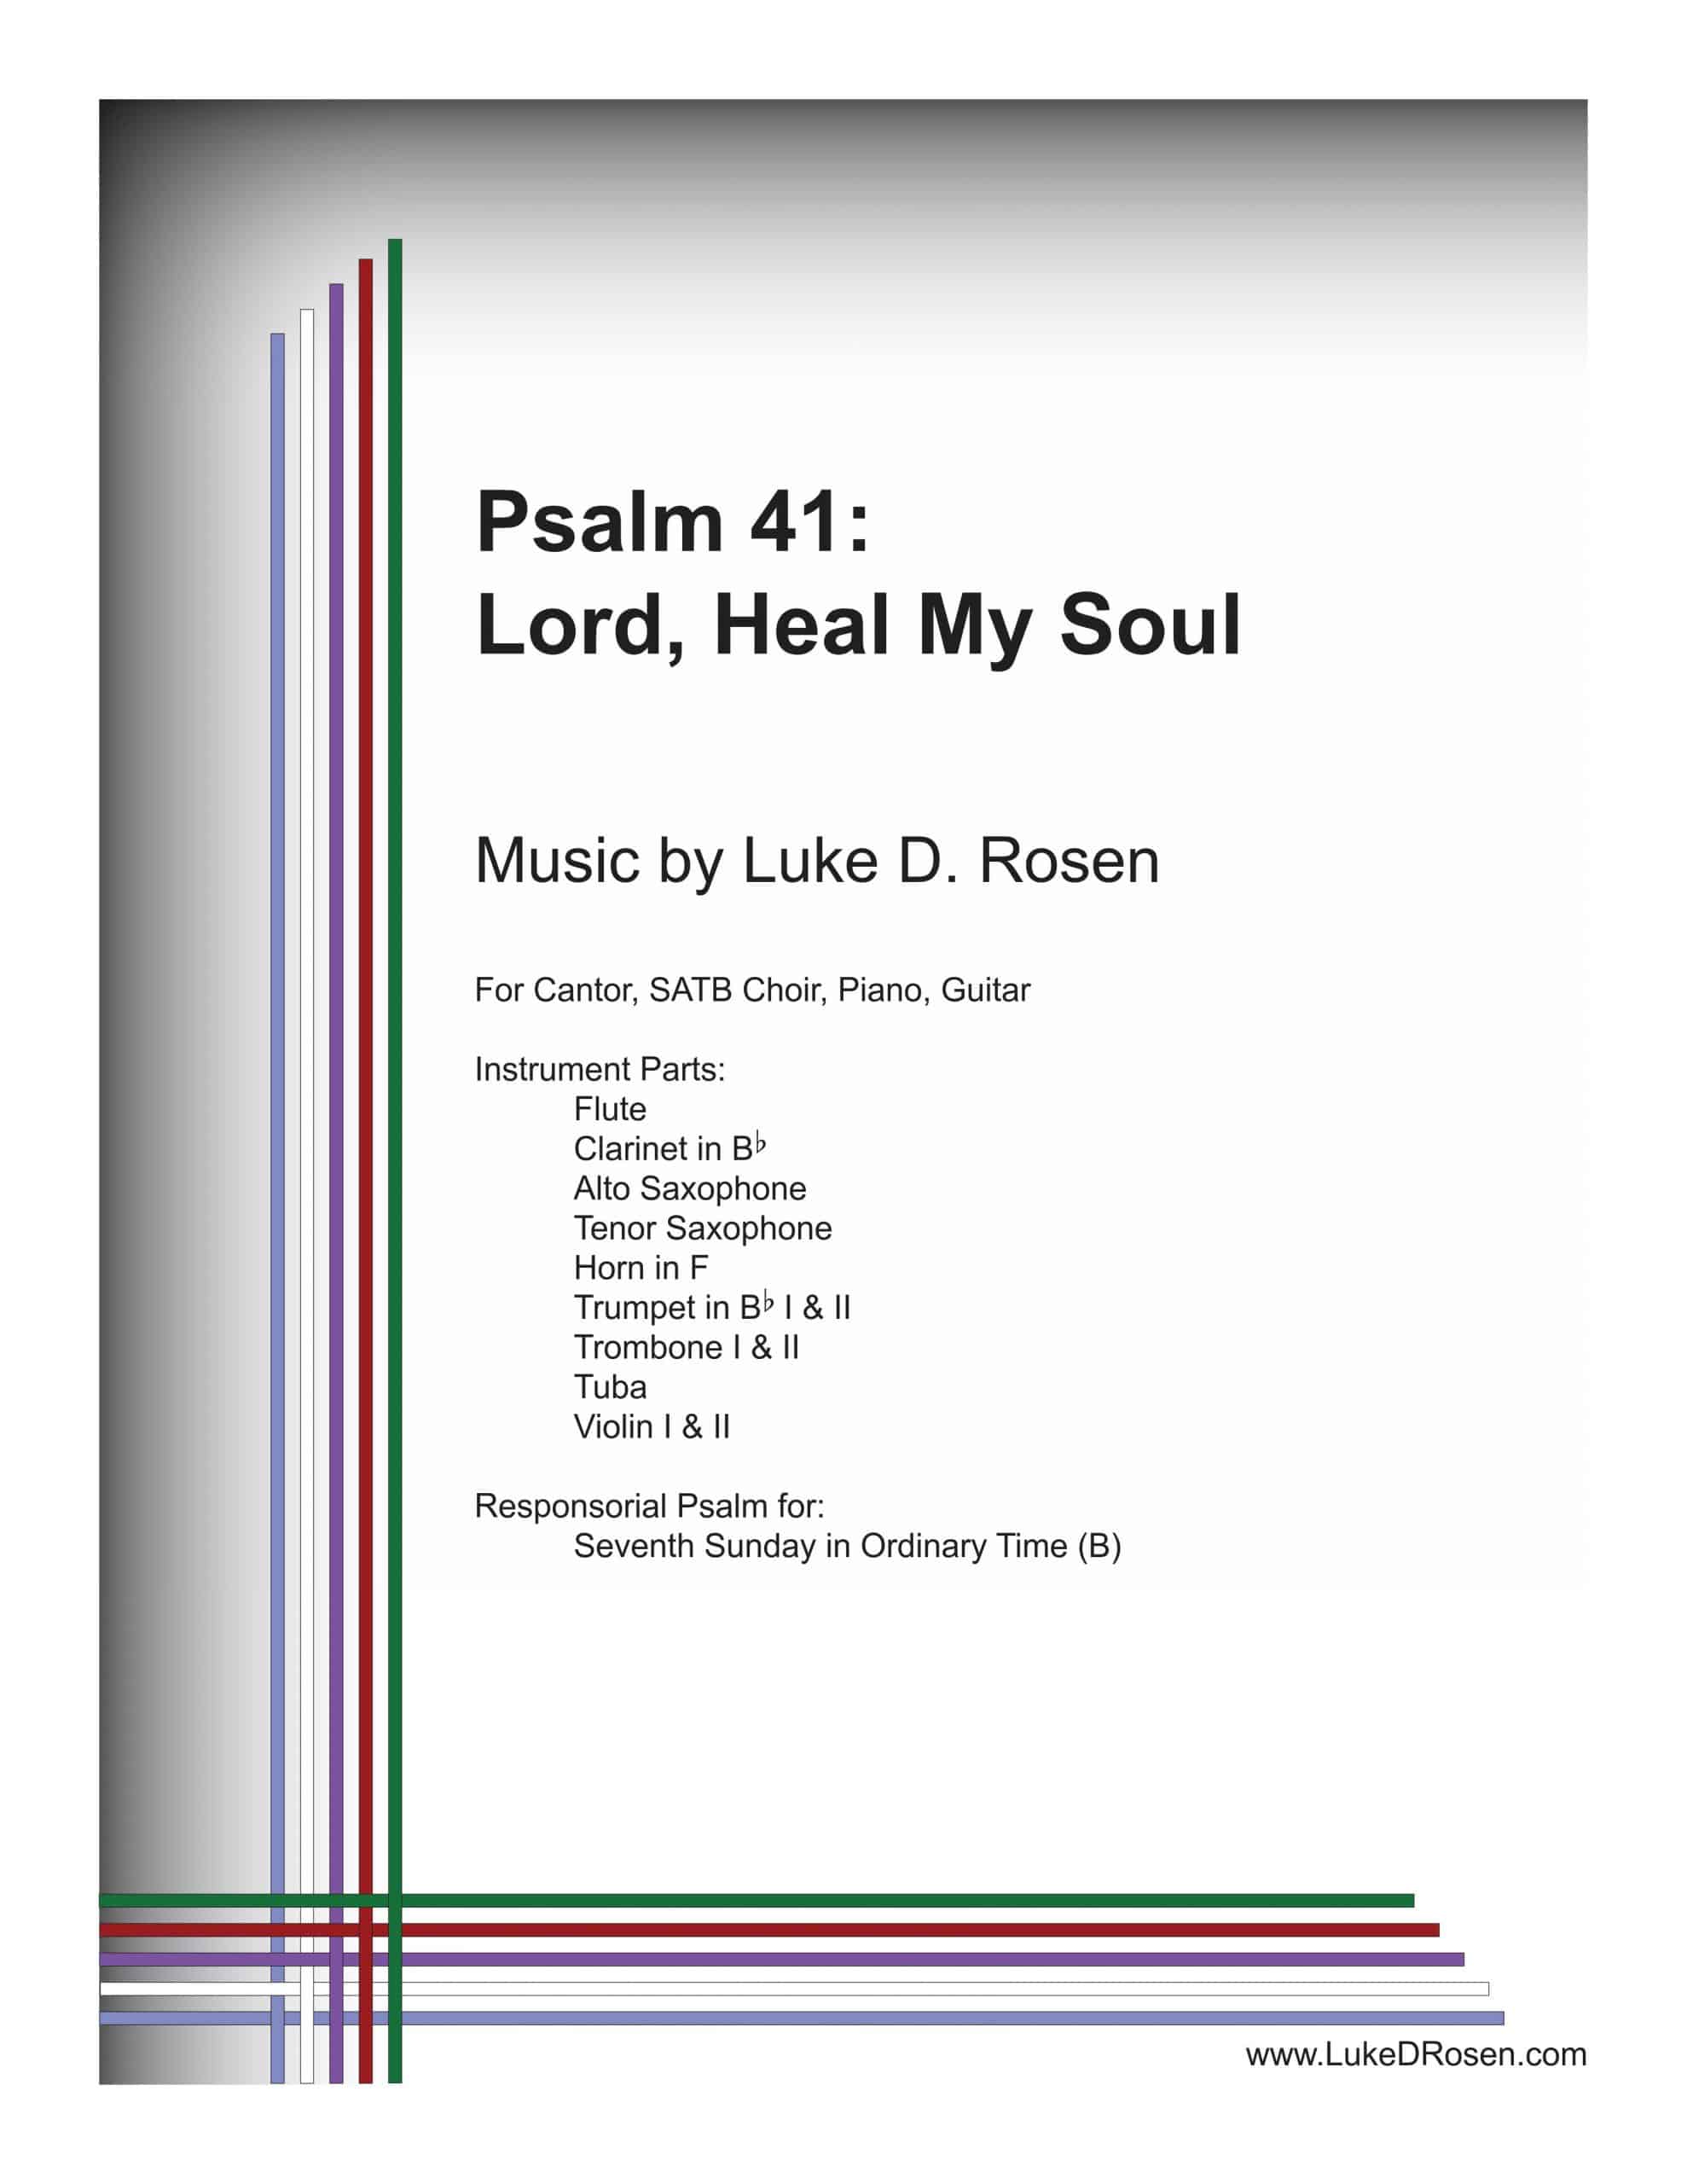 Psalm 41 – Lord, Heal My Soul (Rosen)